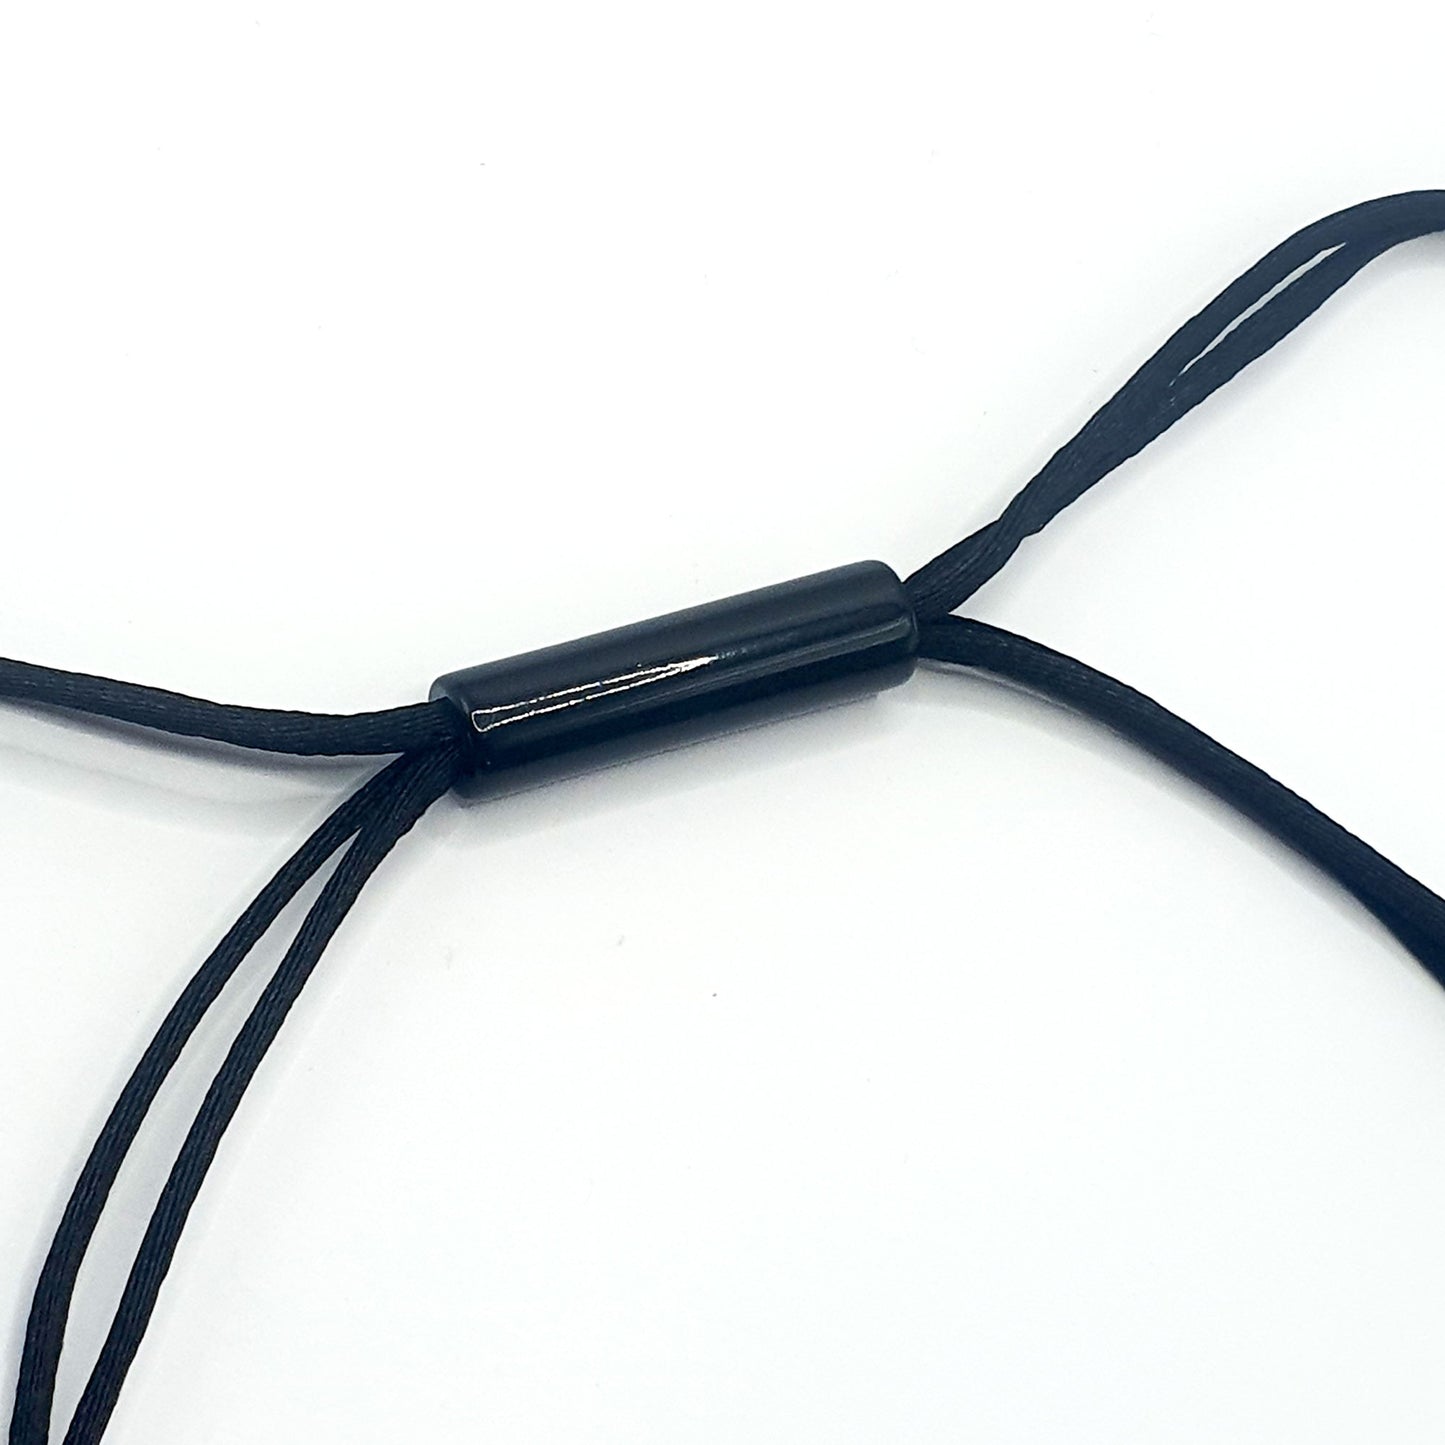 Adjustable cord fastener